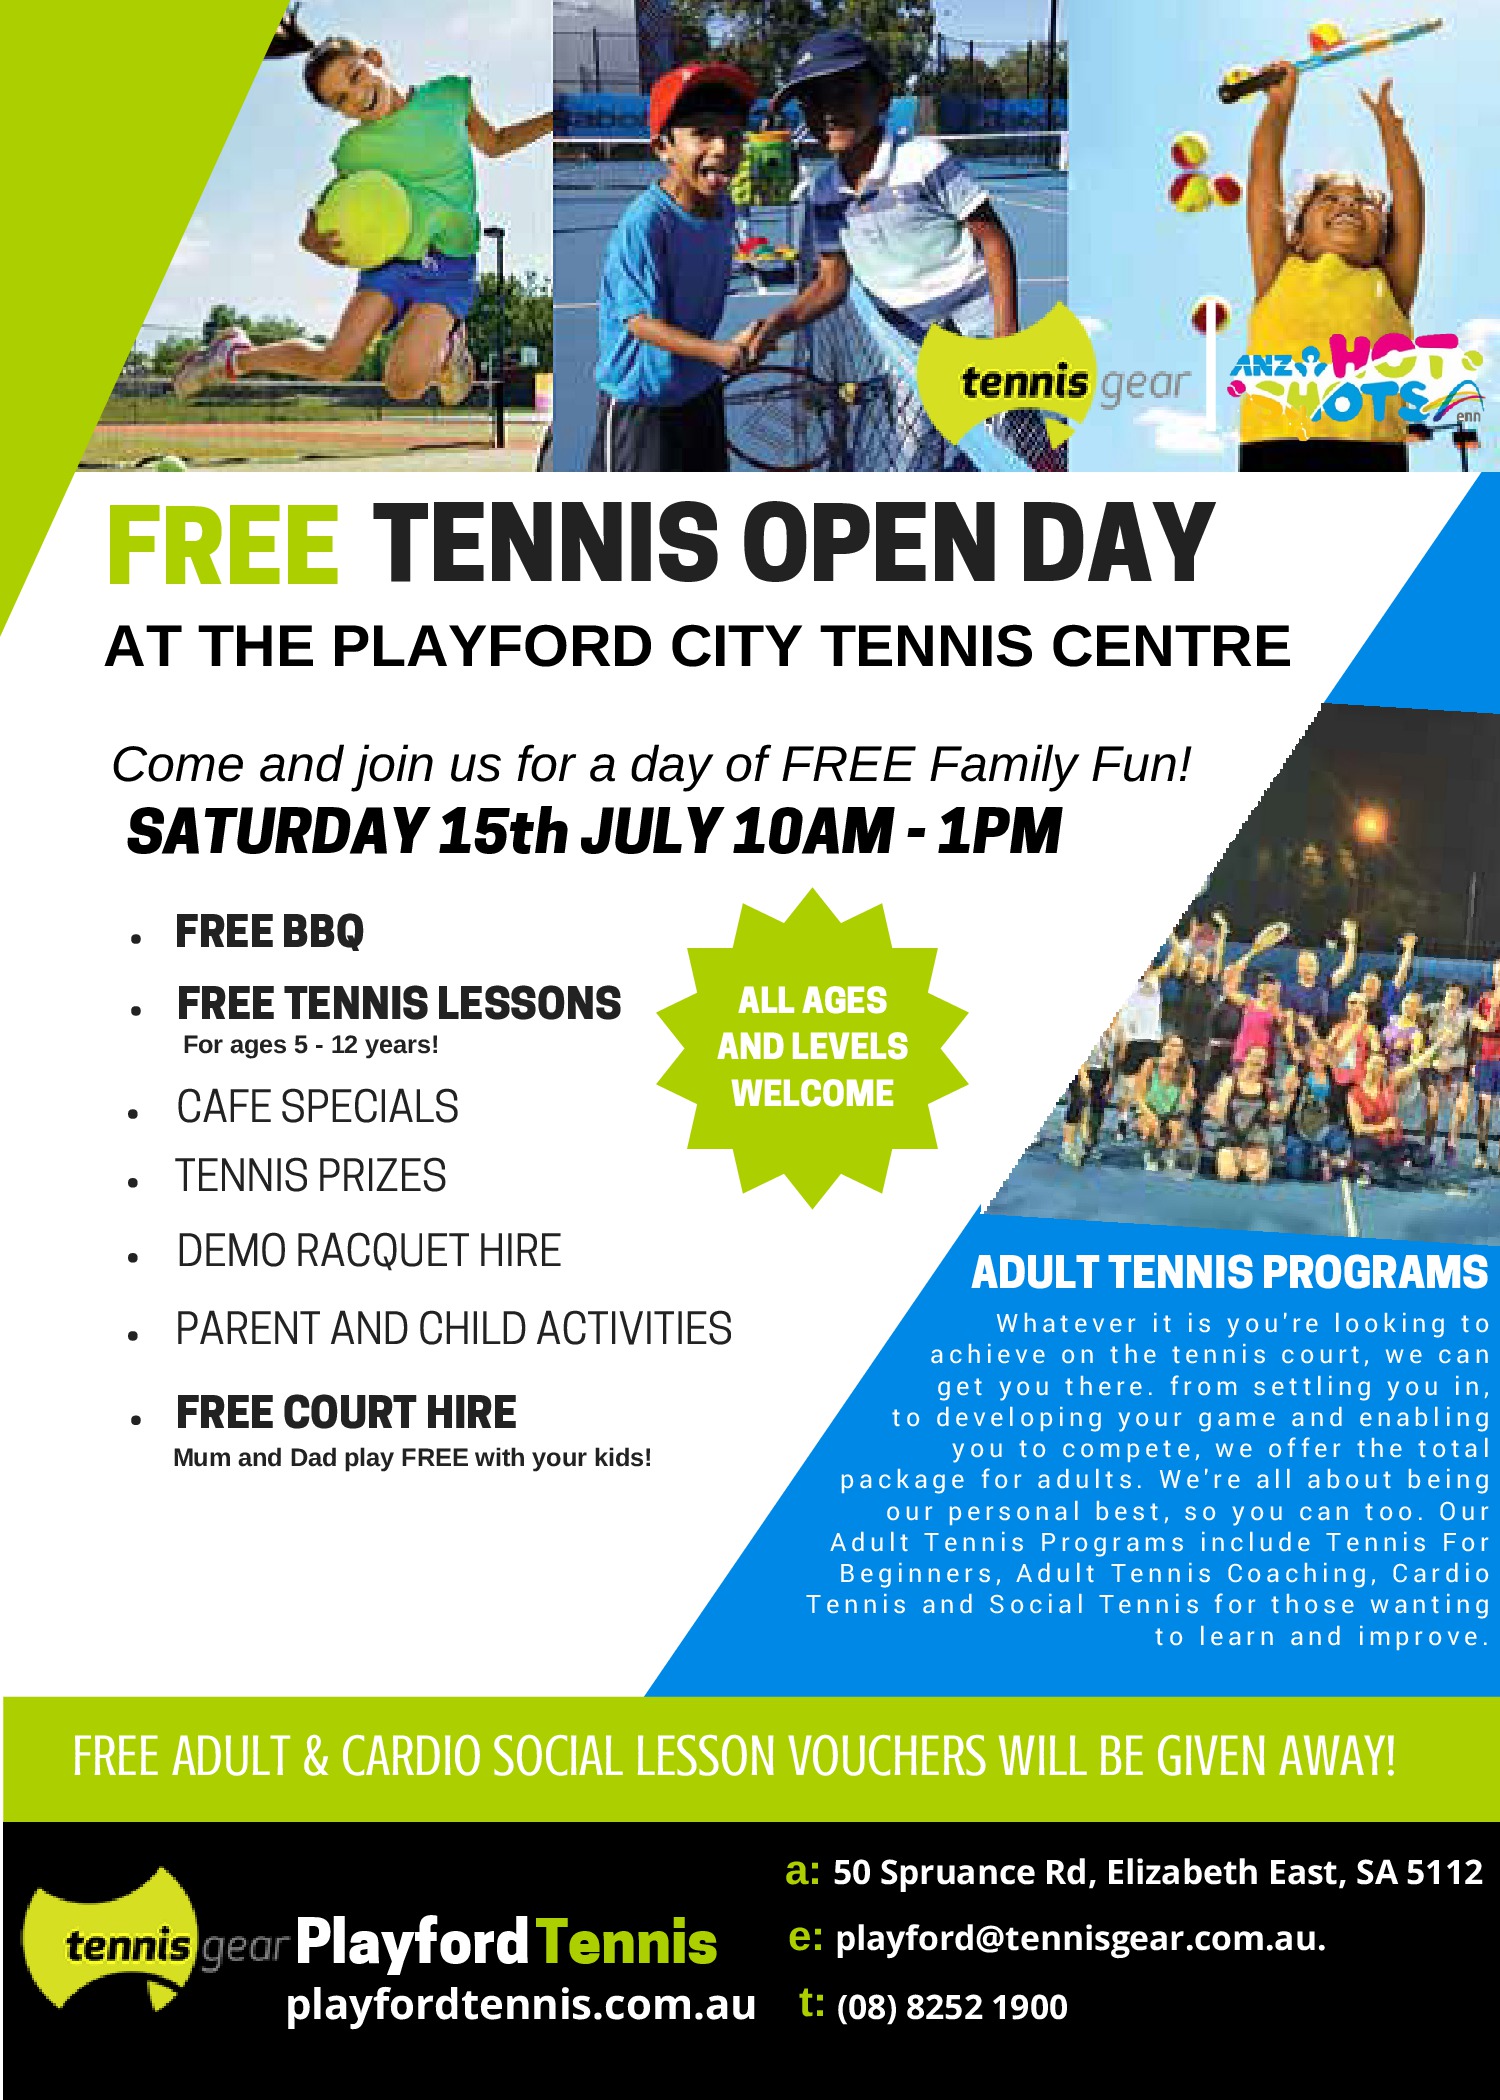 Playford City Tennis Centre Free Tennis Day – Saturday 15 July